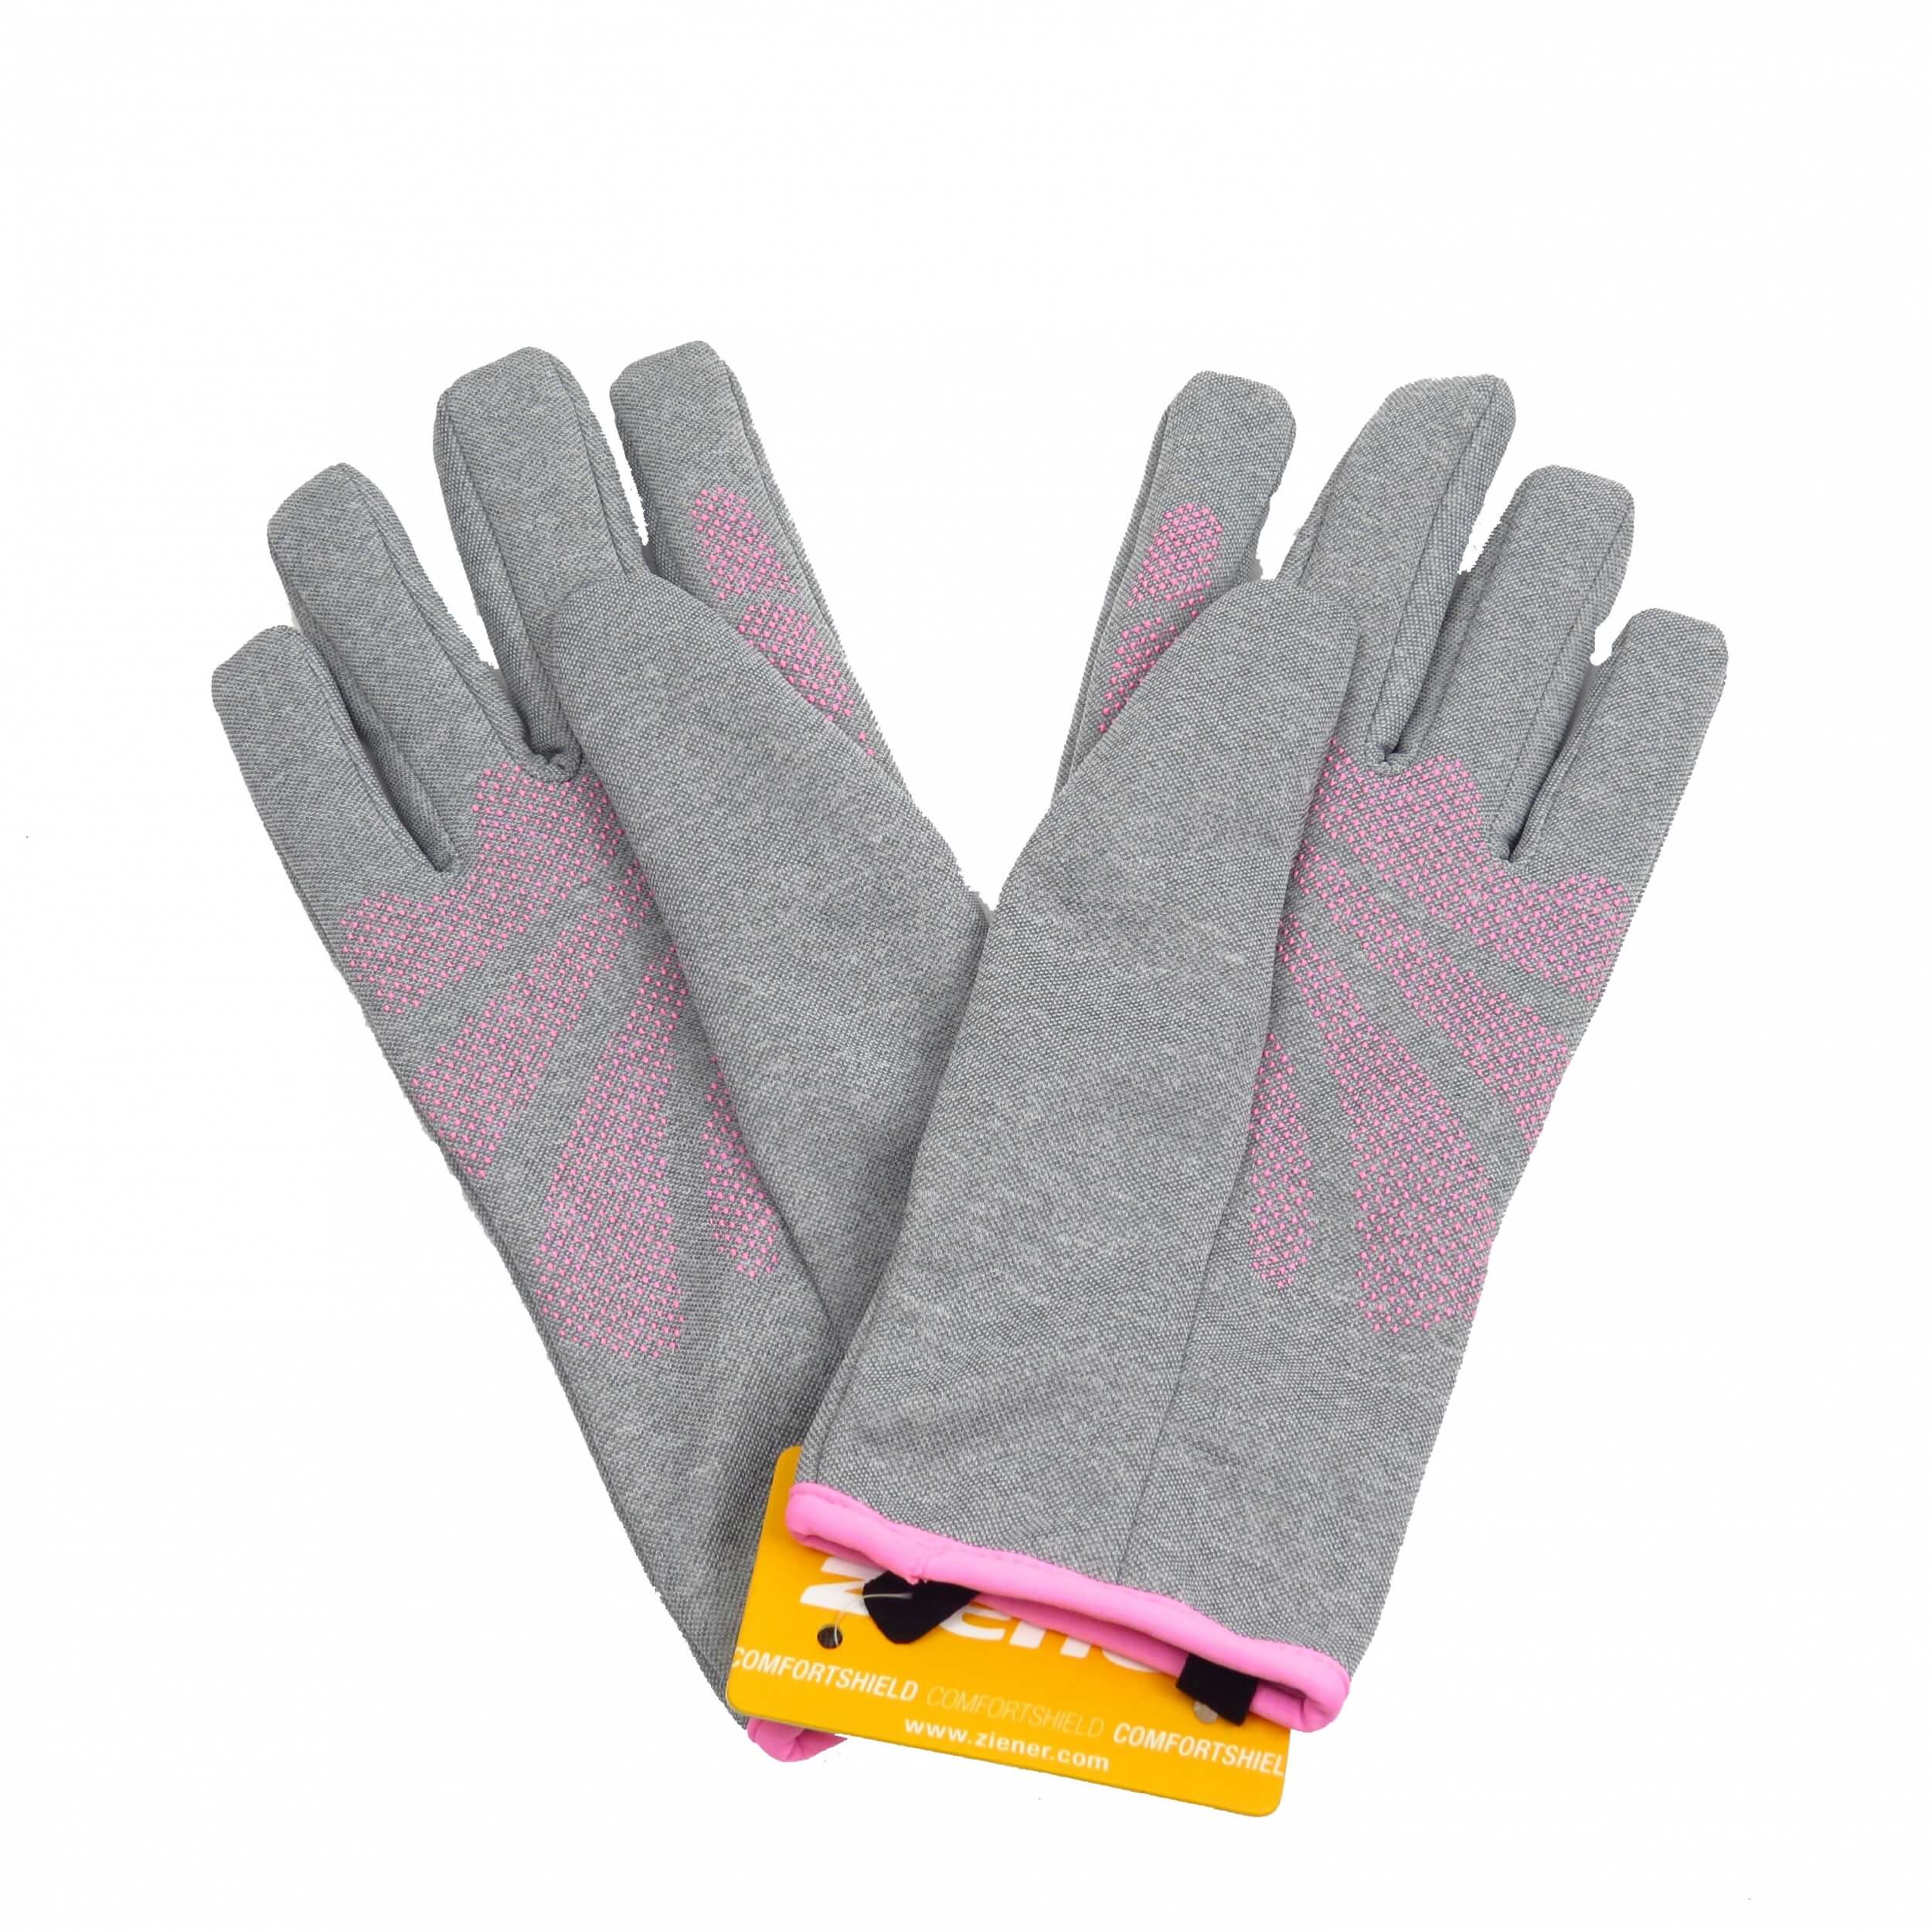 ZIENER Winter Handschuhe Innovation grau 758